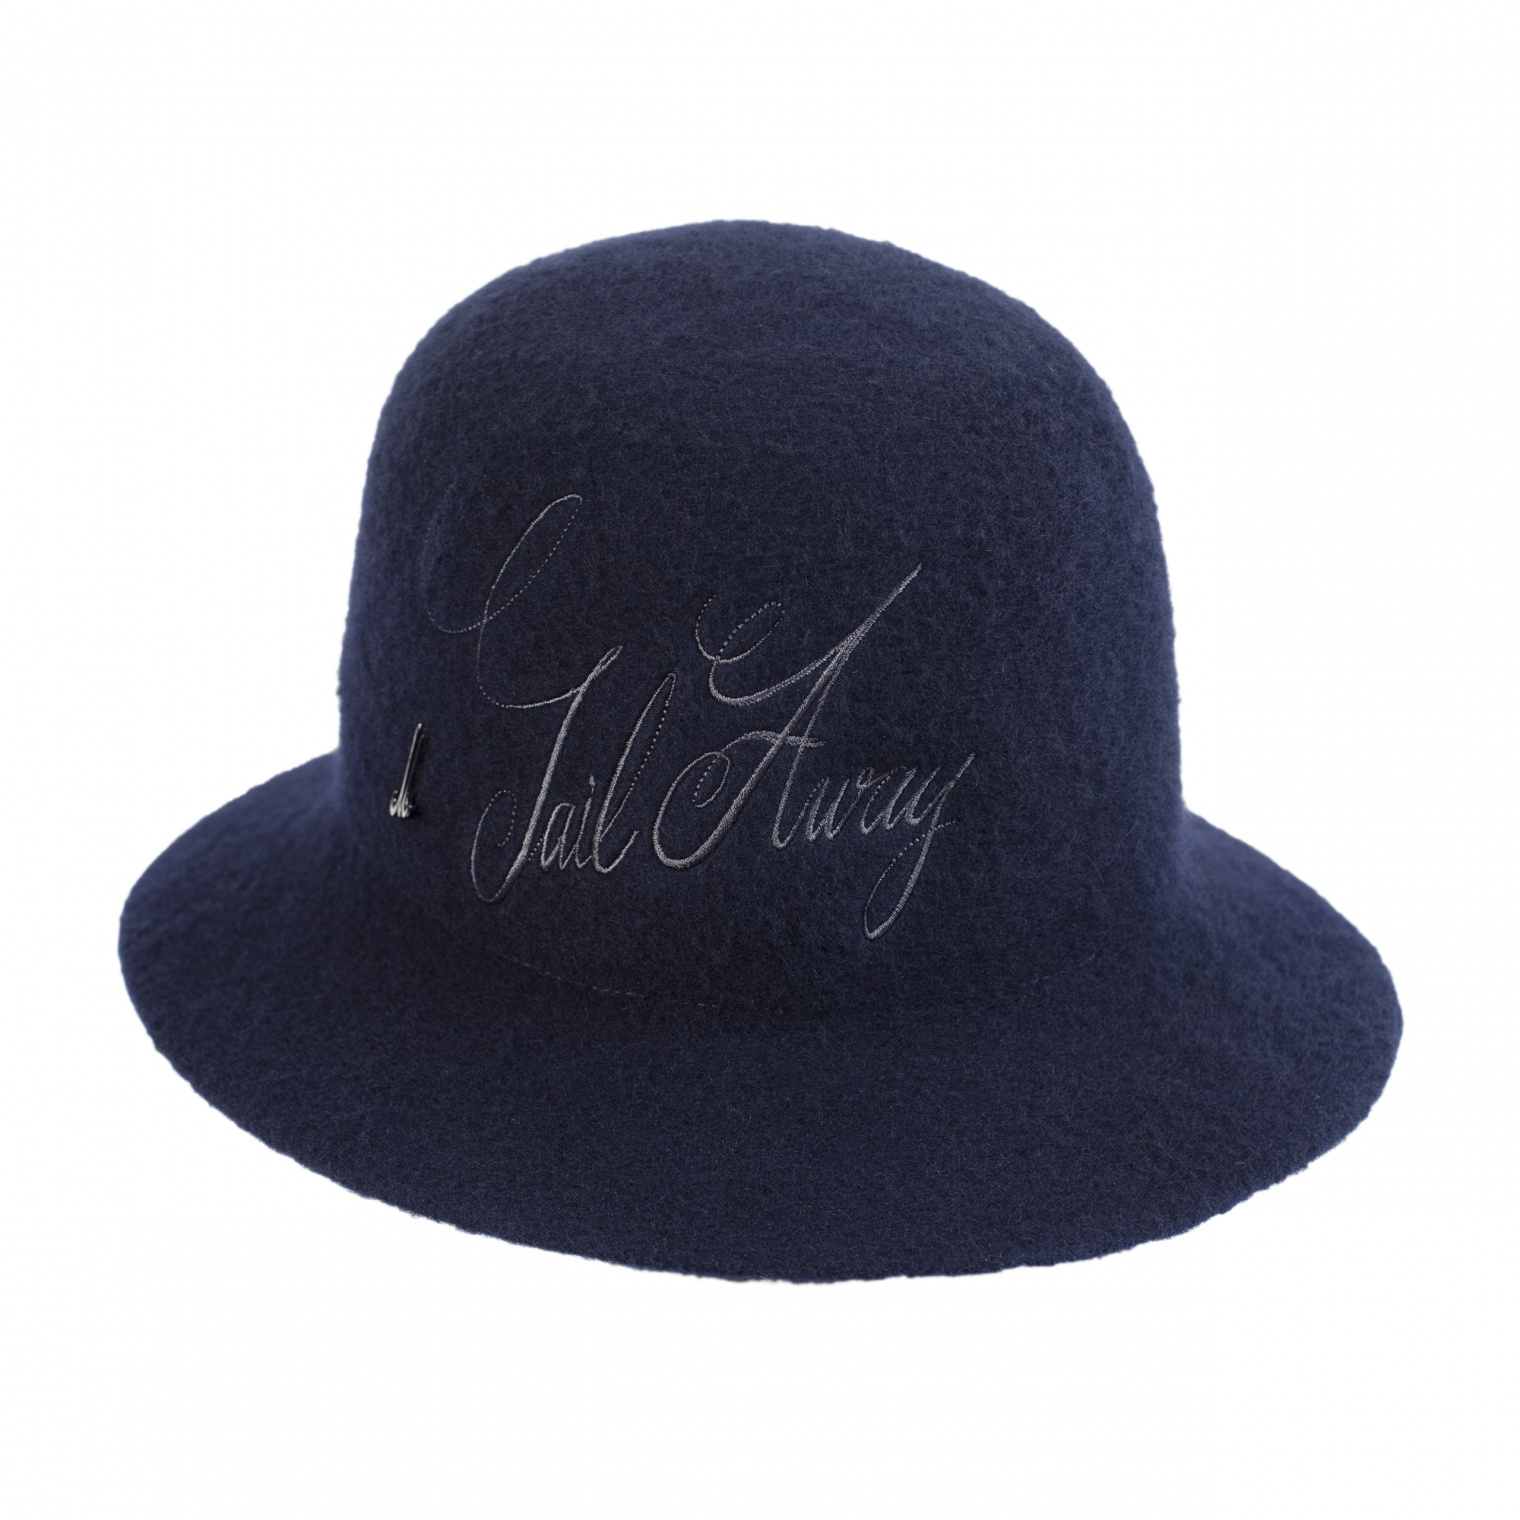 Junya Watanabe Шерстяная шляпа с вышитым логотипом